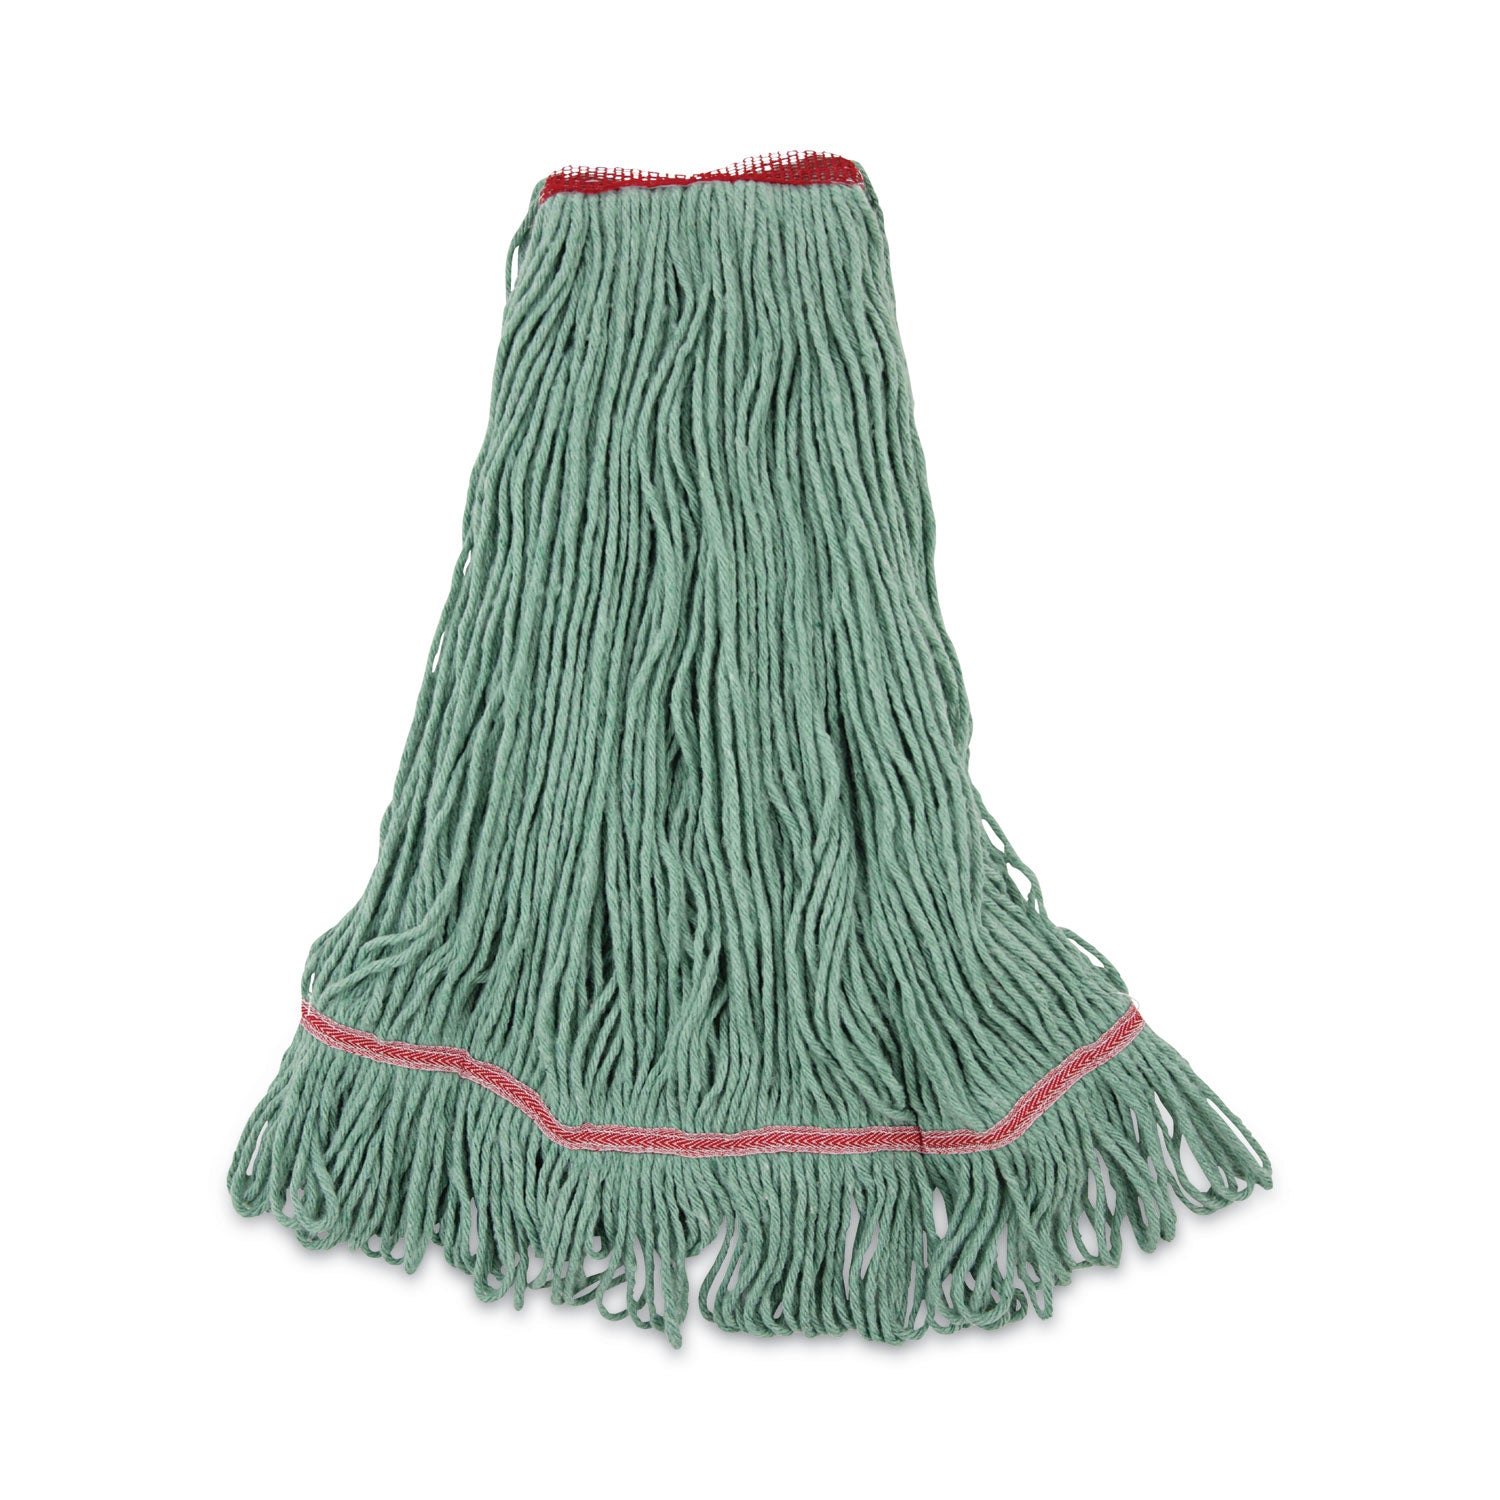 mop-head-premium-standard-head-cotton-rayon-fiber-large-green_bwk503gnnb - 1